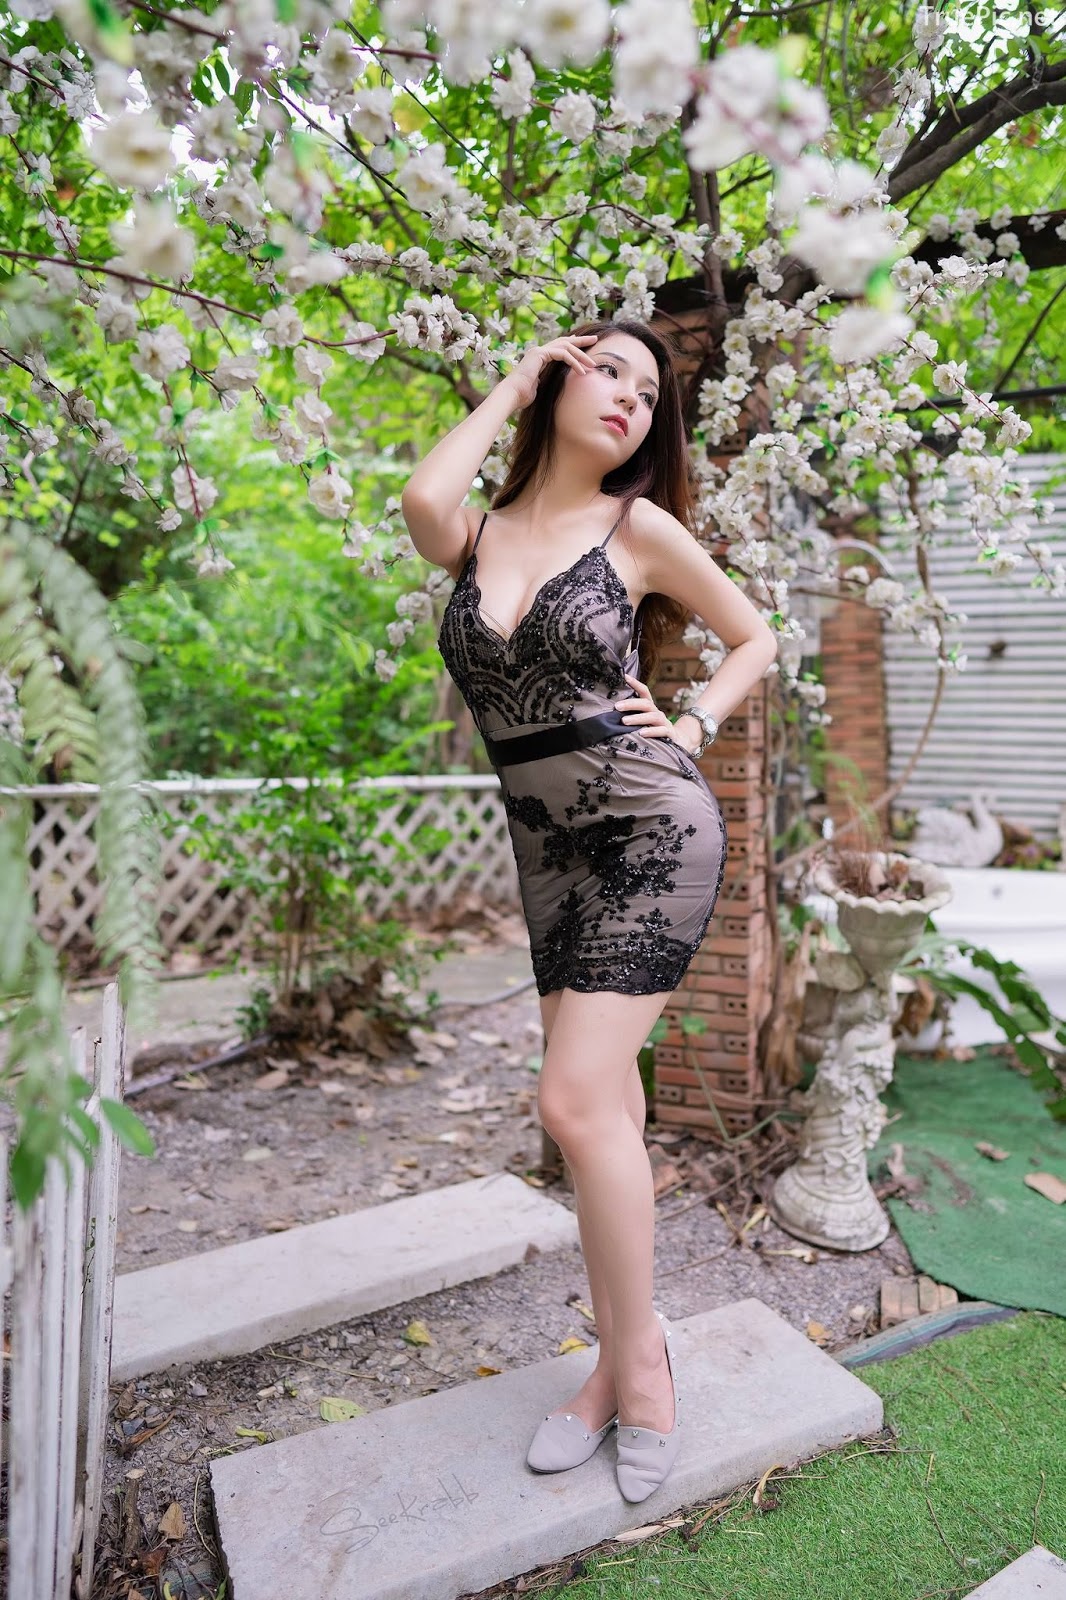 Thailand hot model - Janet Kanokwan Saesim - Black sexy garden - TruePic.net - Picture 9